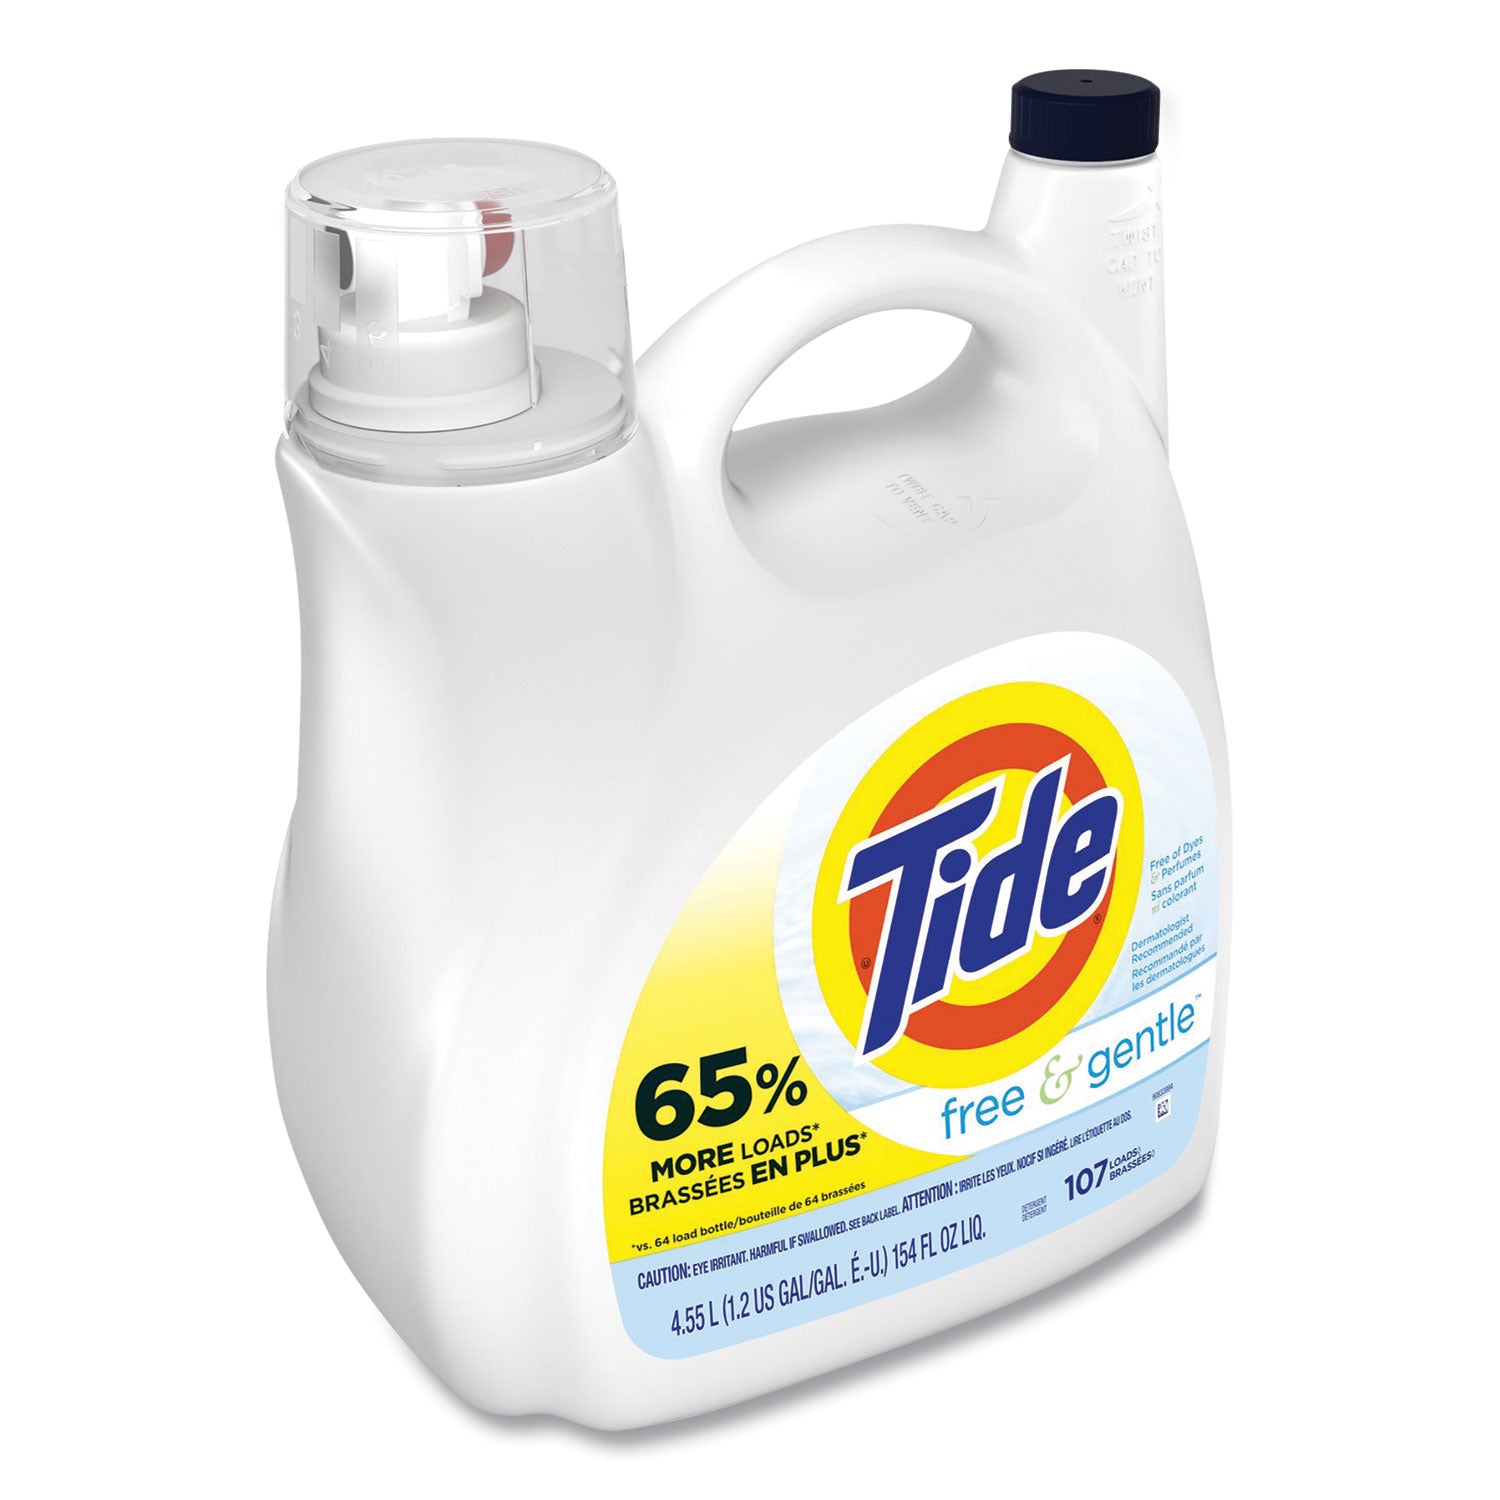 Free and Gentle Liquid Laundry Detergent, 107 Loads, 154 oz Pump Bottle